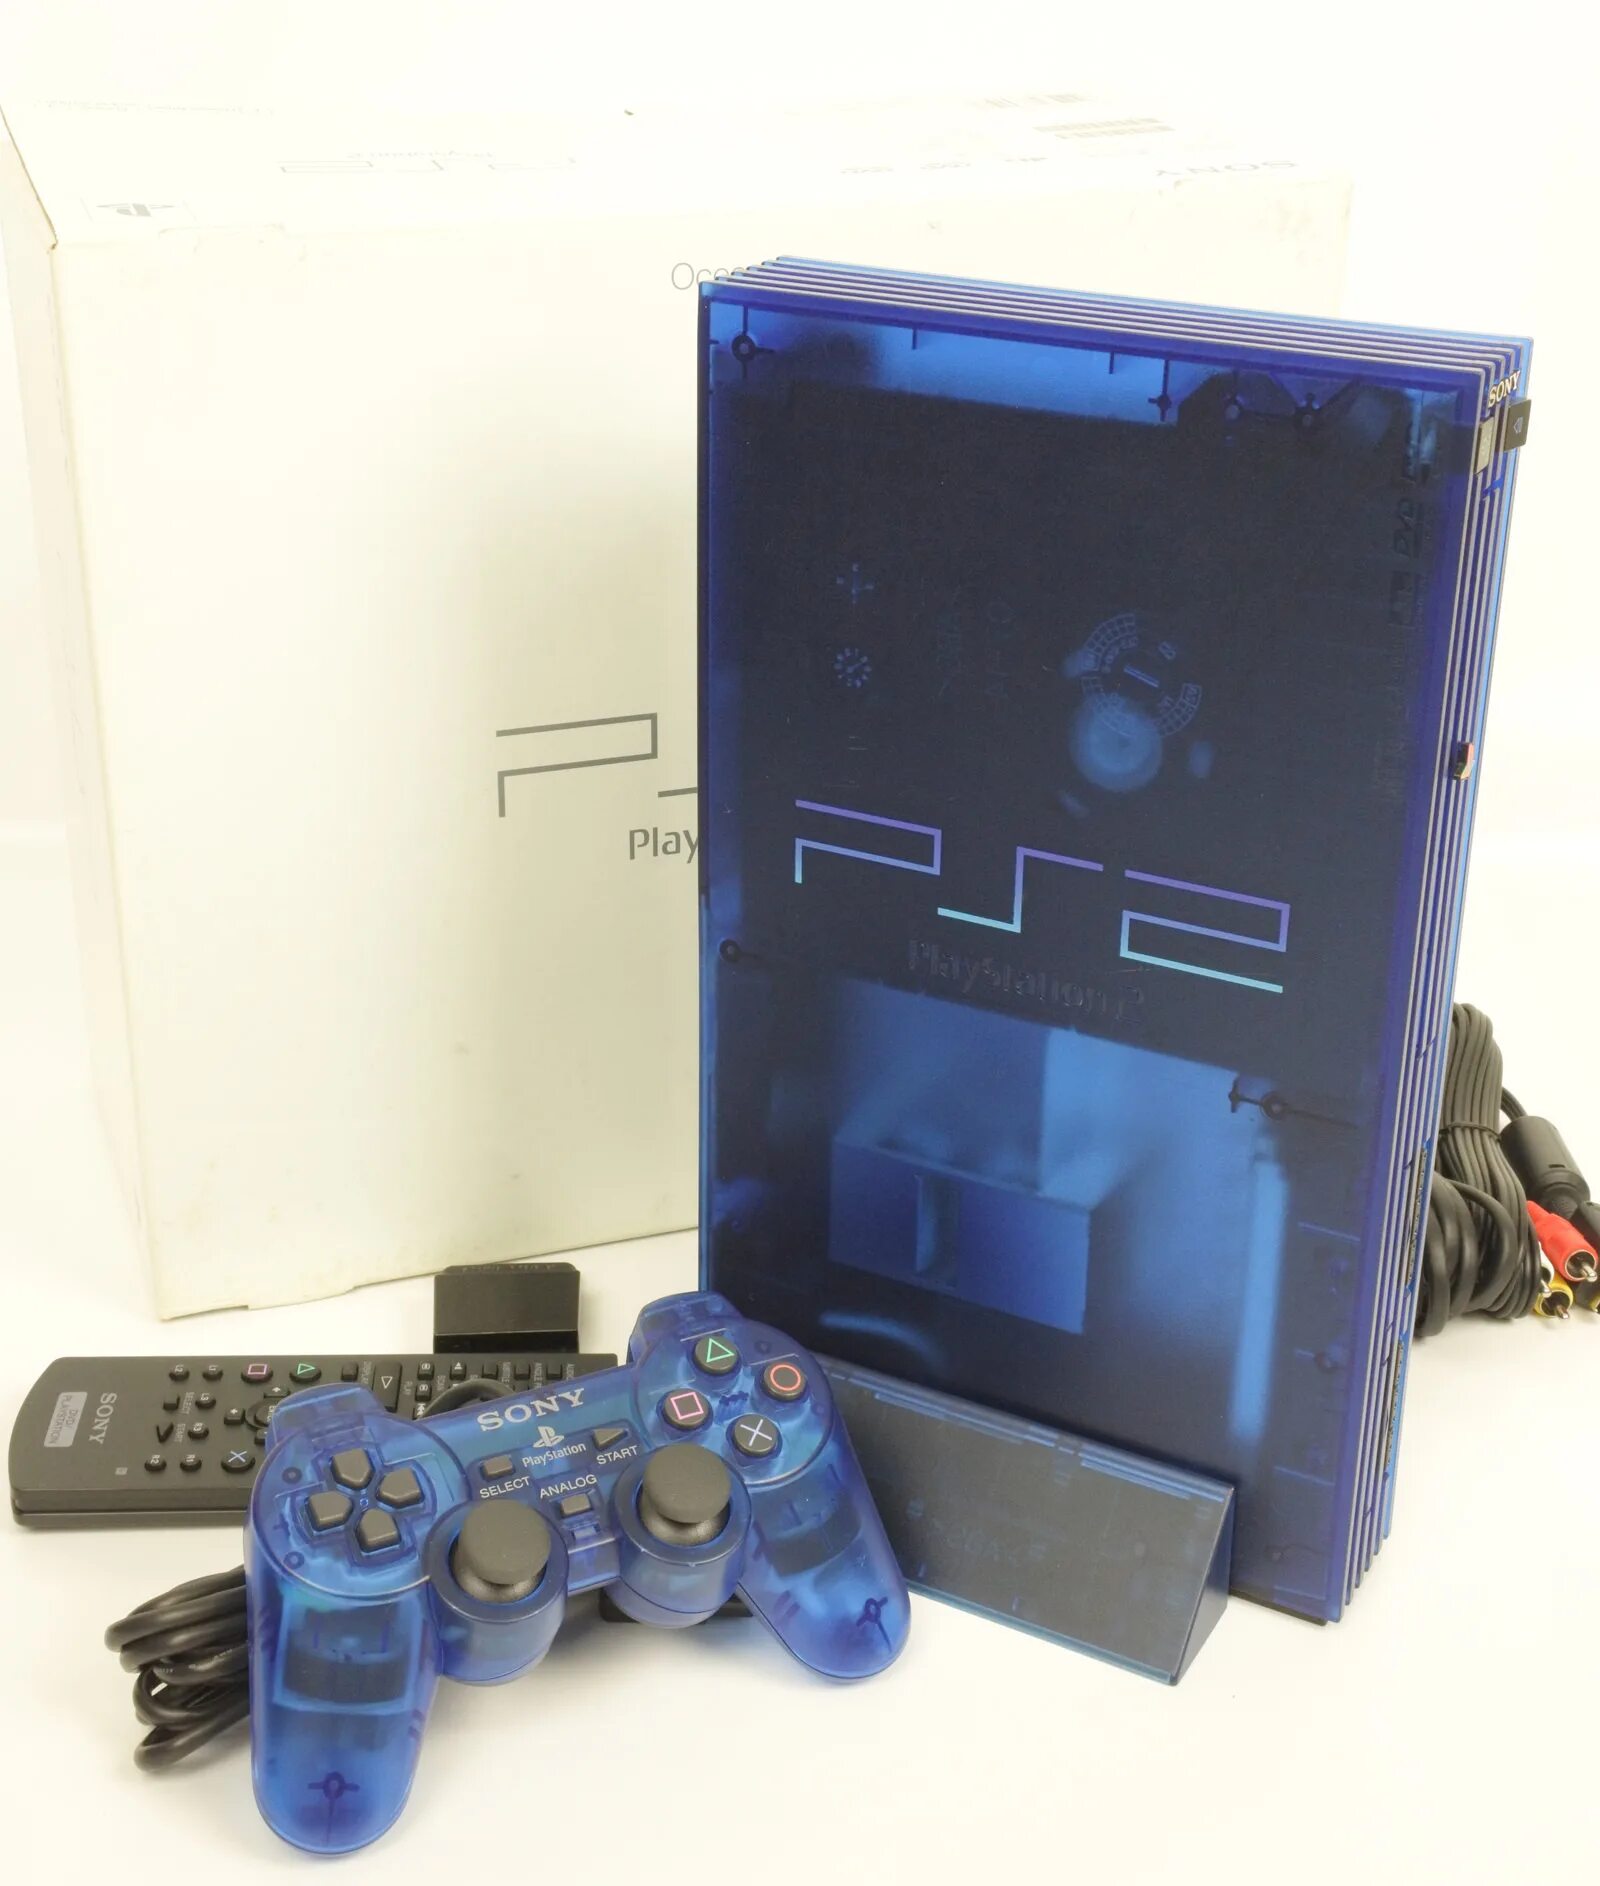 Ps2 Ocean Blue. Sony PS 2 Blue Ocean. Ps2 7000. SCPH 7000 ps2.